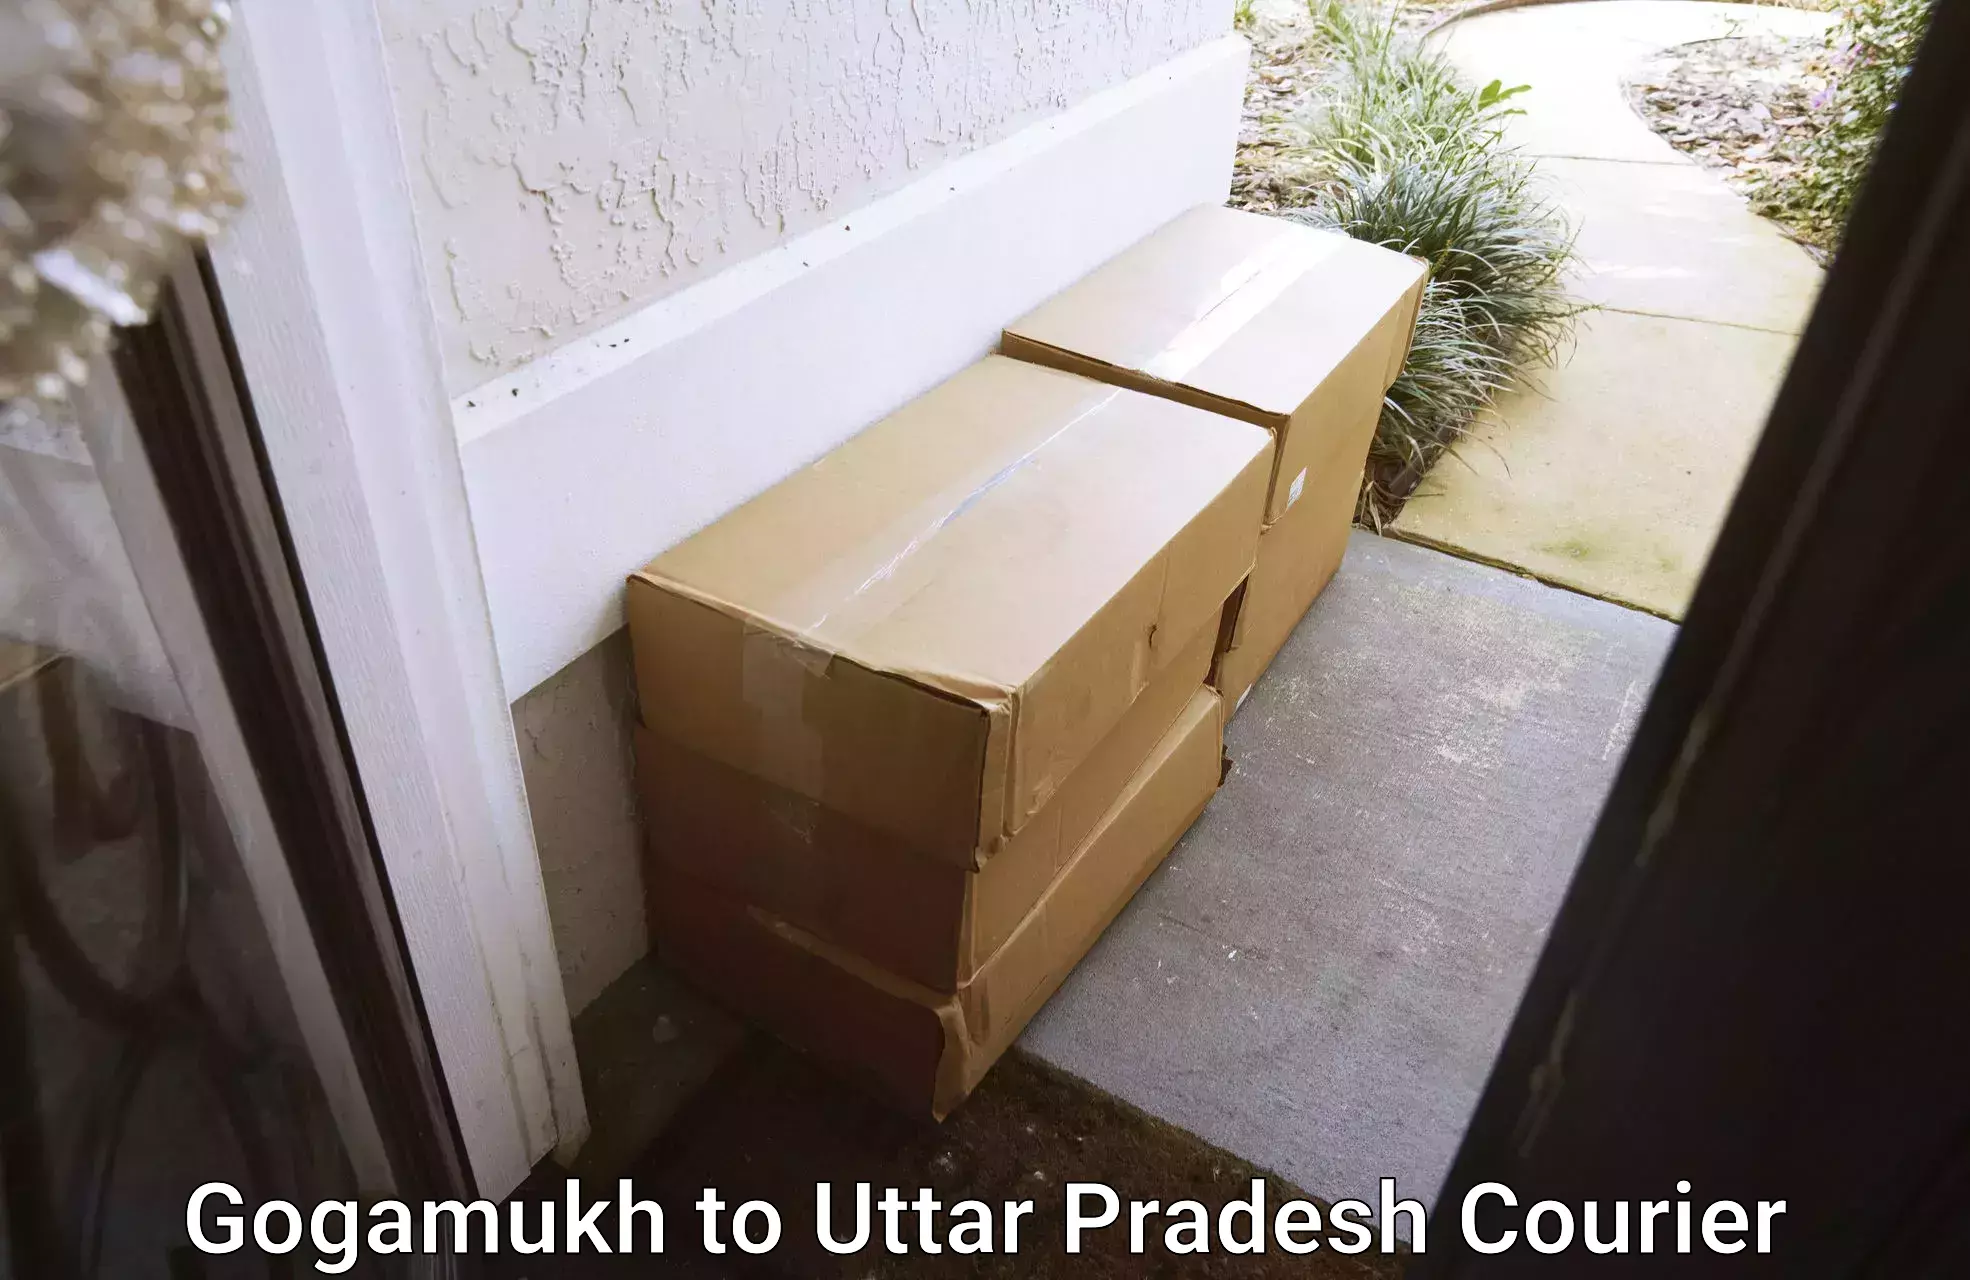 Speedy delivery service Gogamukh to Moradabad